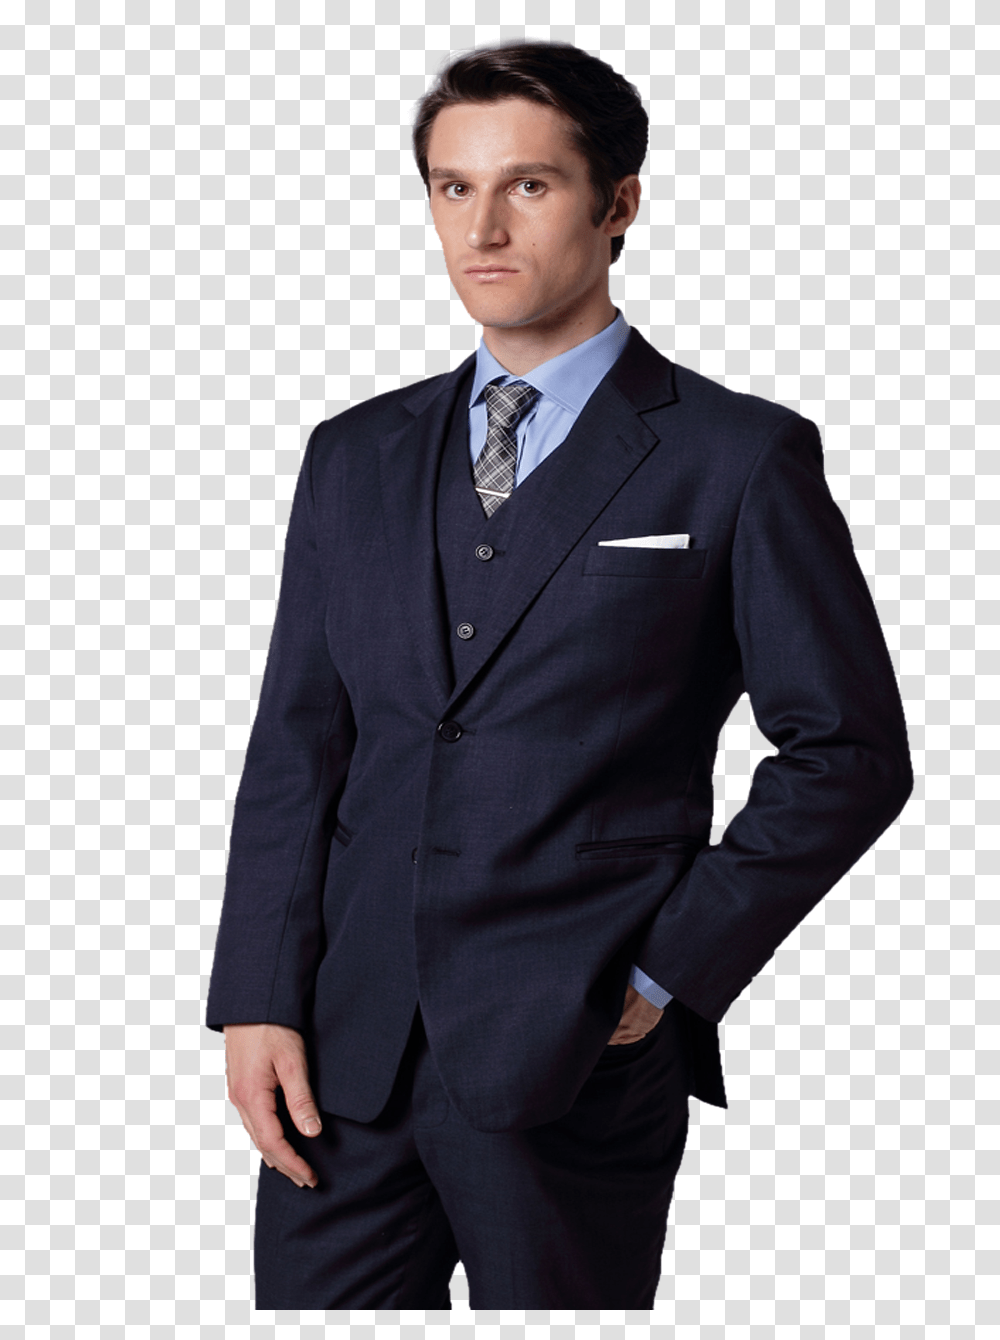 Suit Background Piece Suit Three Piece Images, Overcoat, Clothing, Apparel, Tie Transparent Png